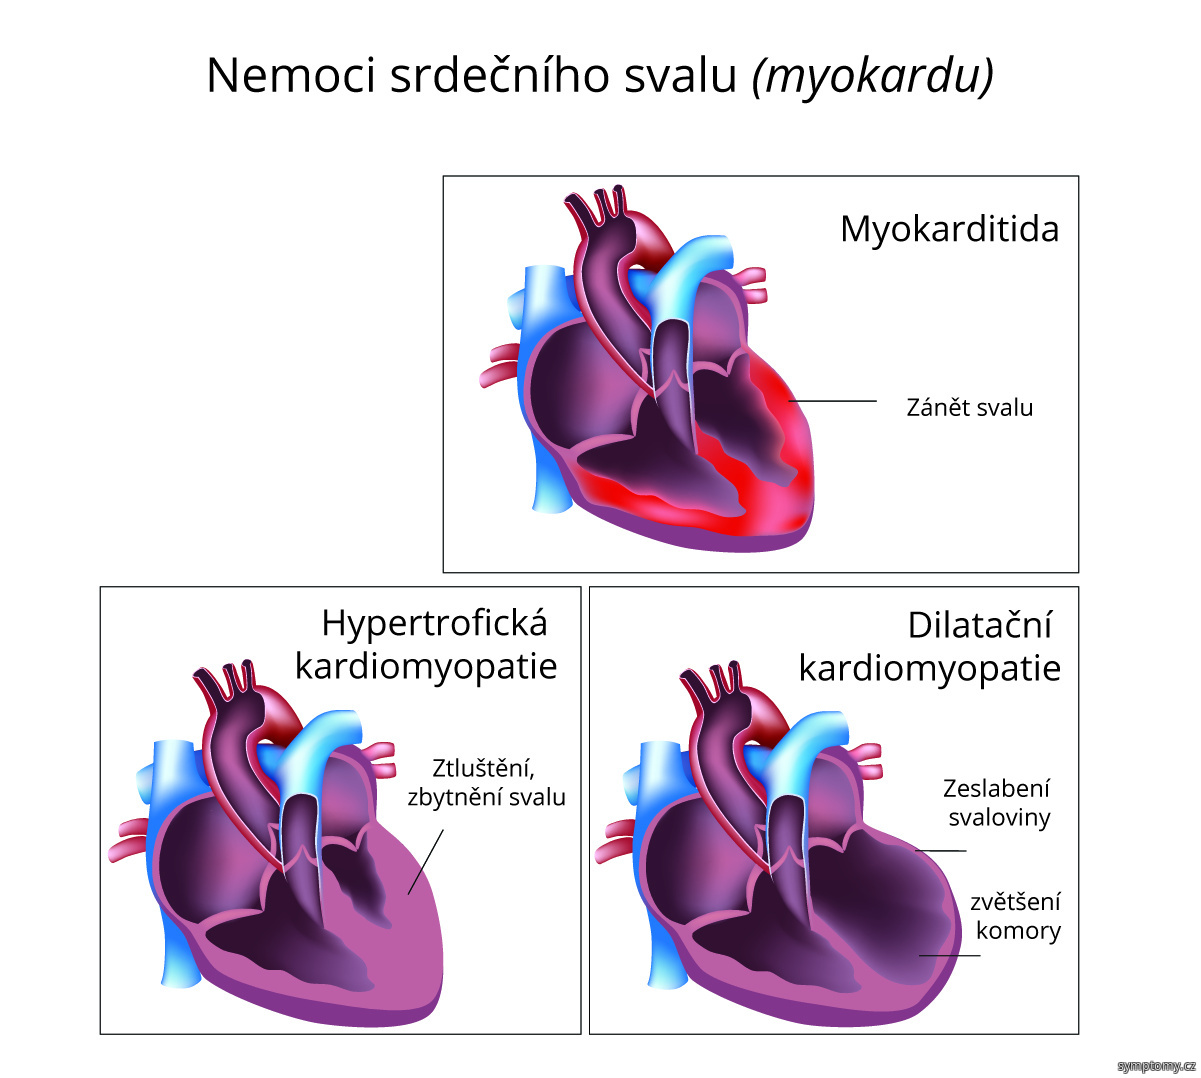 Nemoci srdečního svalu (myokardu)